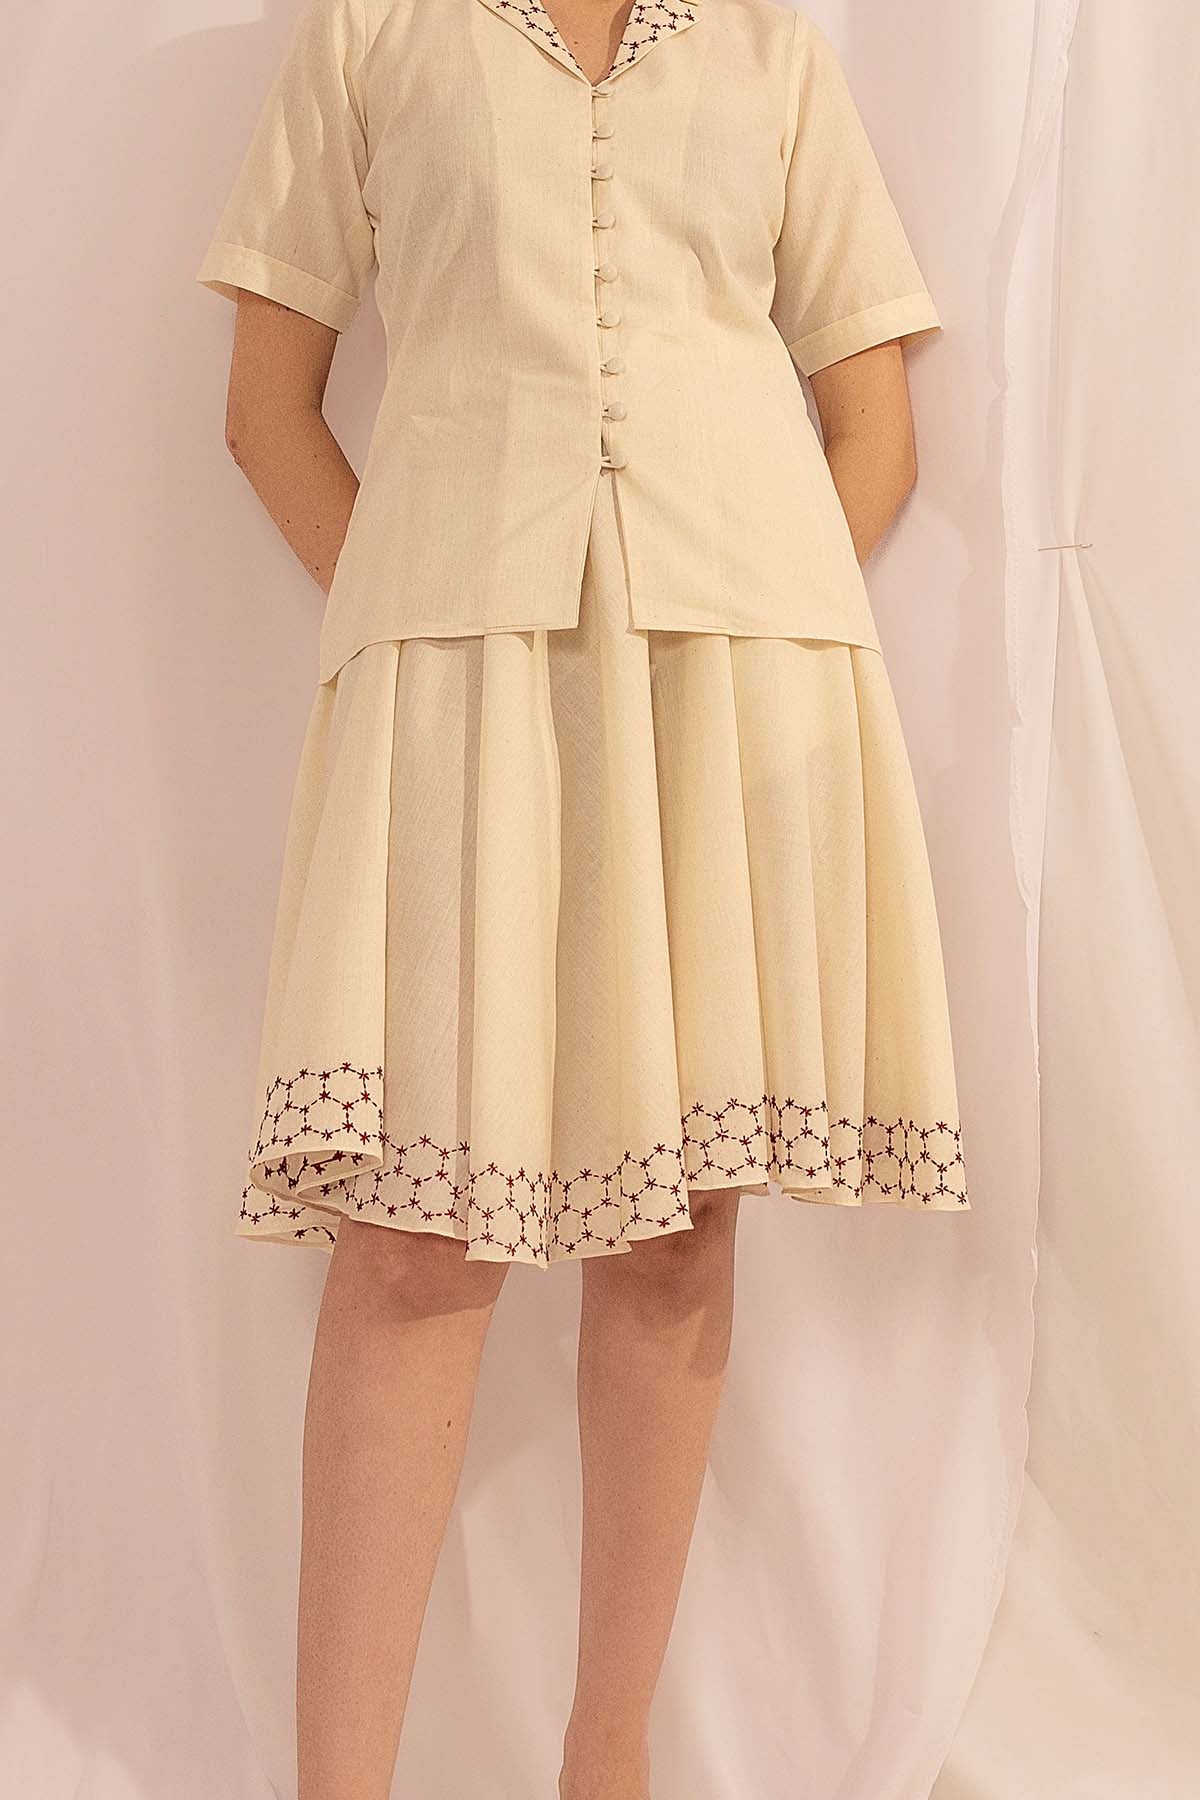 Cotton Off-White Collar Skirt